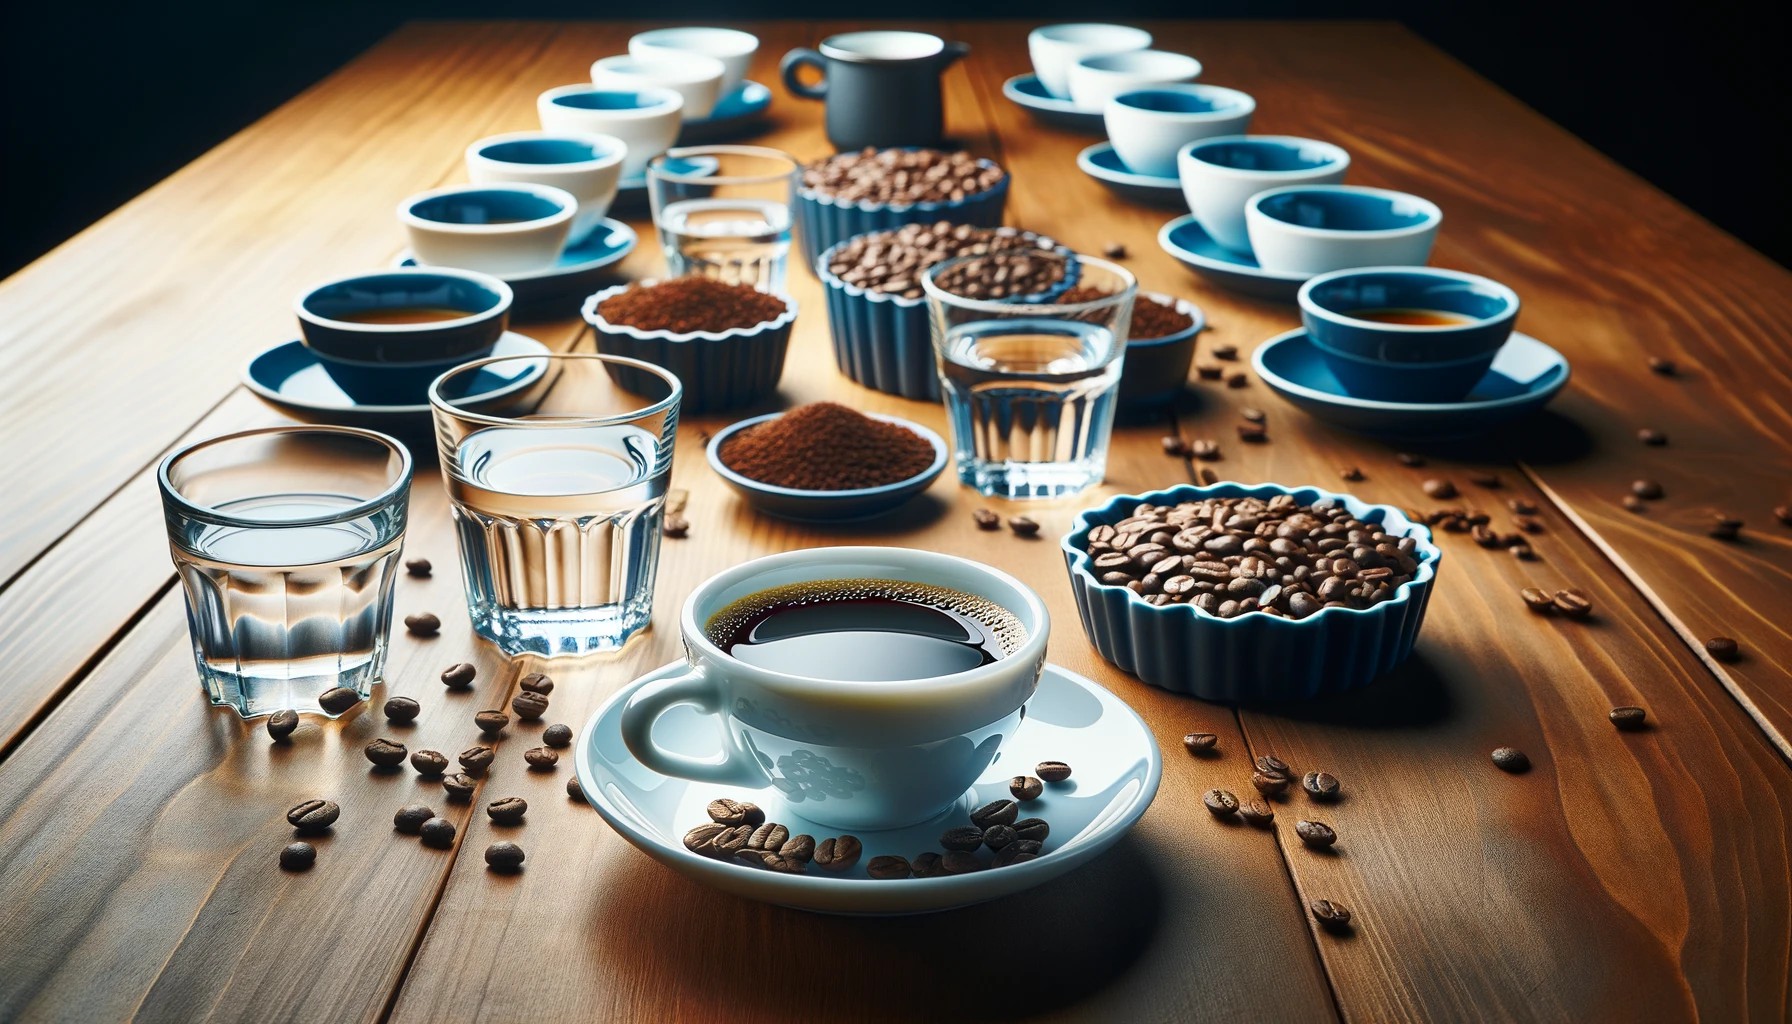 杯測 浸泡式沖煮 咖啡貿易 烘焙師 磨豆機 精品咖啡 Cupping Immersion Brewing Coffee Trading Roasters Grinder Specialty Coffee